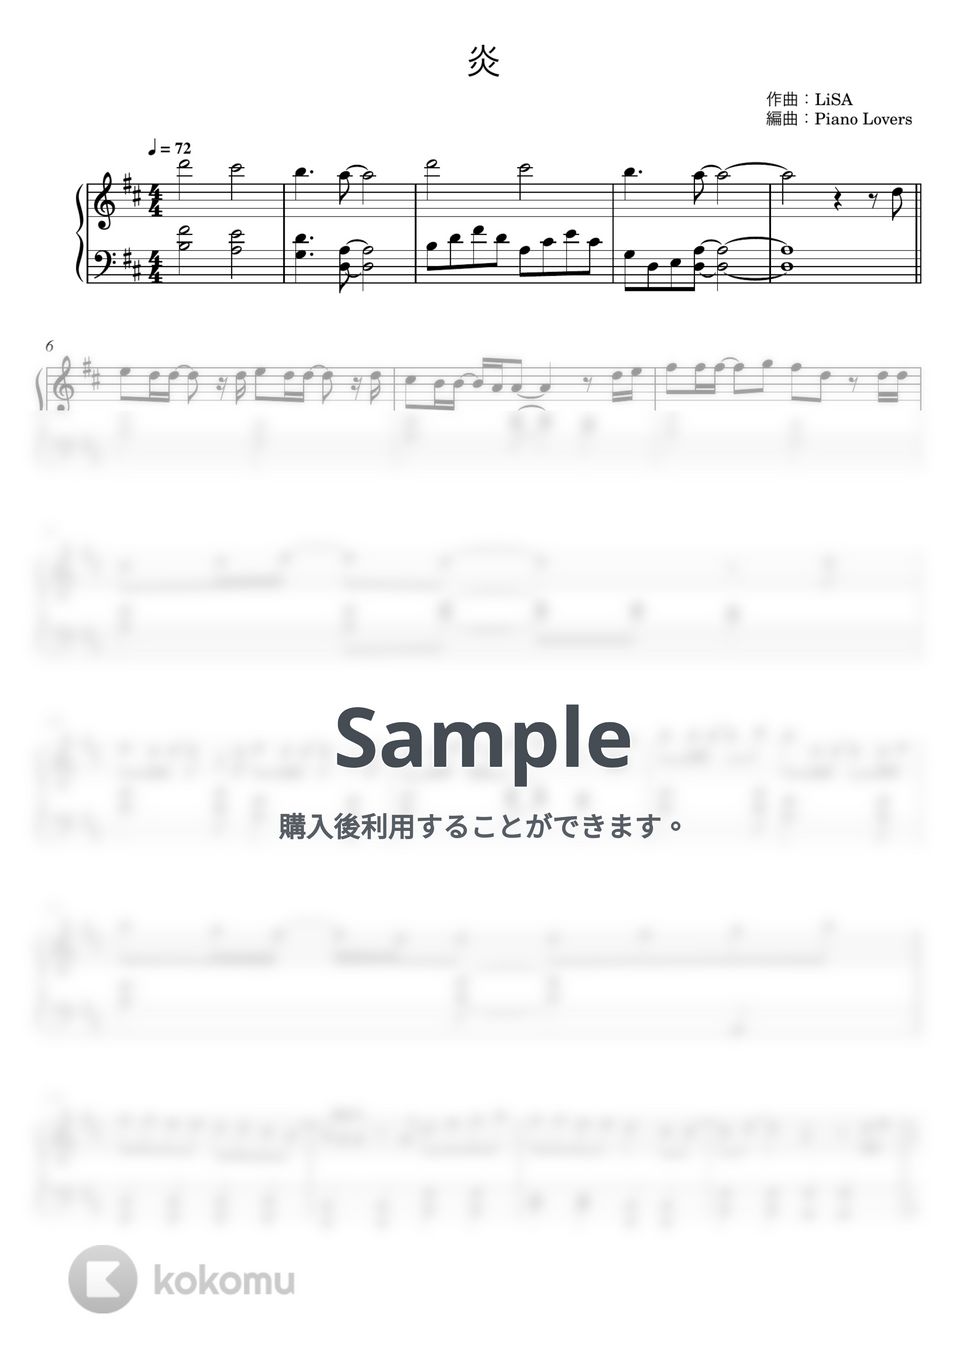 LiSA - 炎 (鬼滅の刃 / ピアノ初心者向け / short ver.) by Piano Lovers. jp